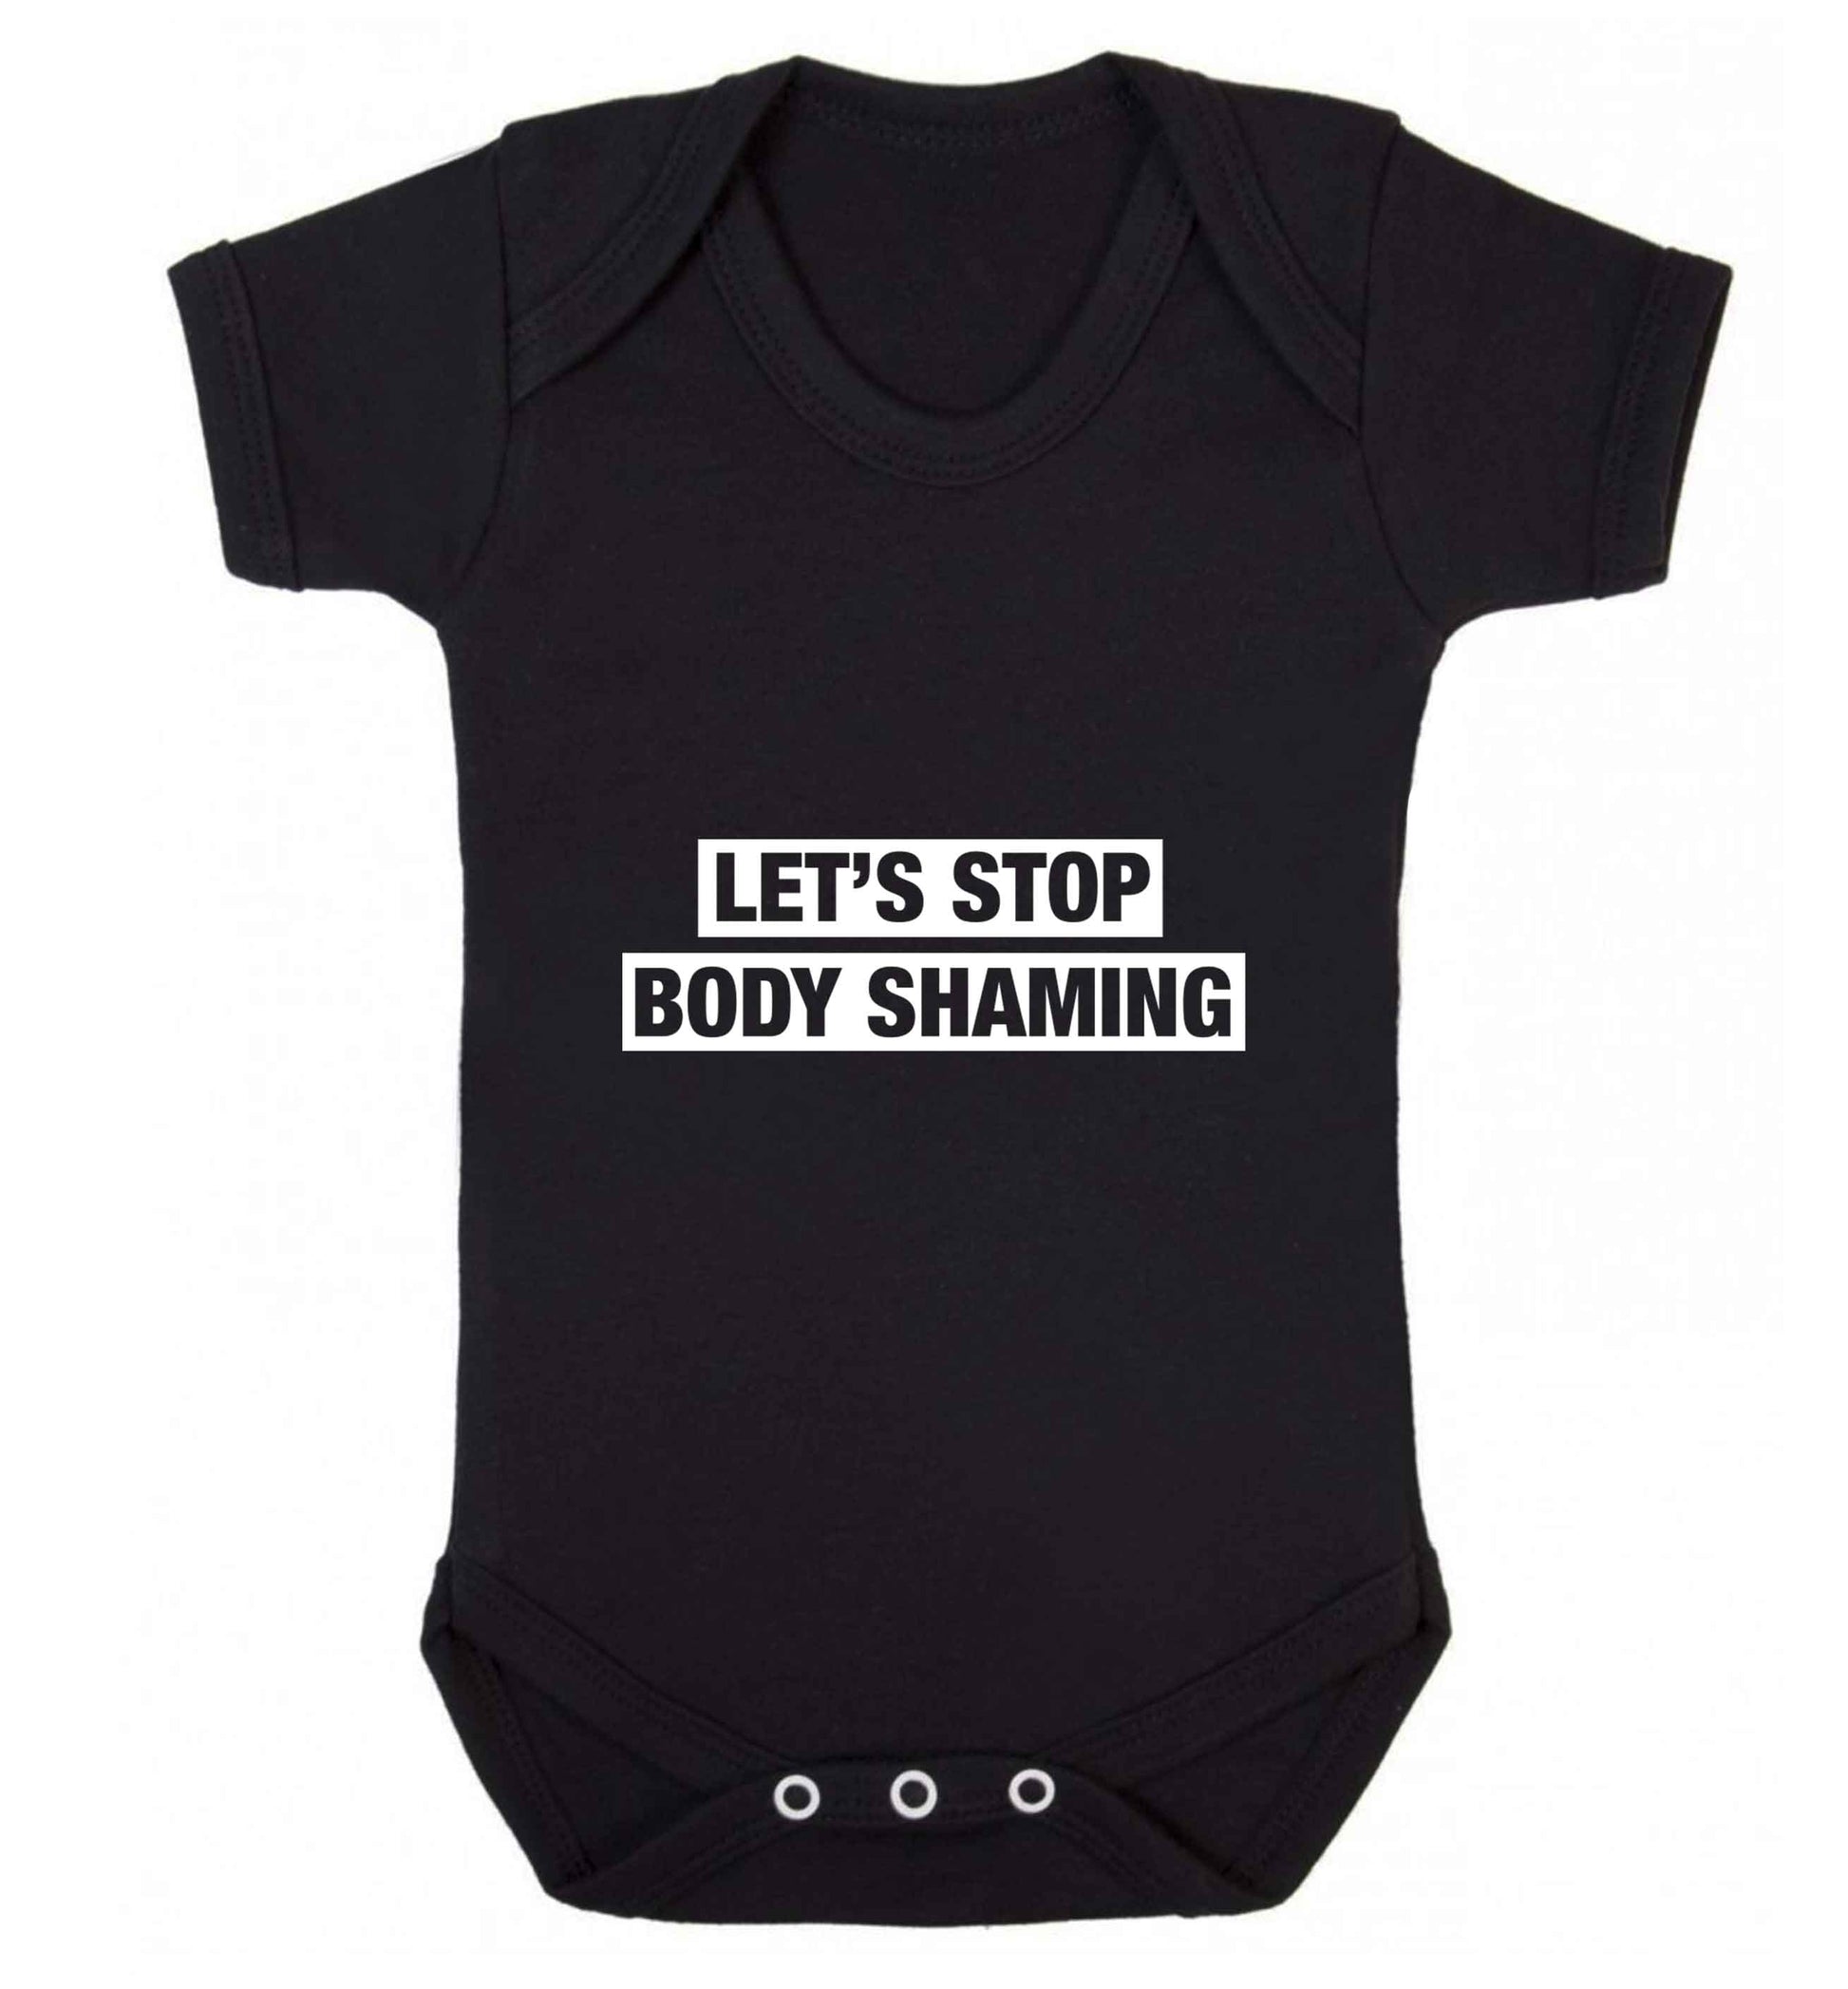 Let's stop body shaming baby vest black 18-24 months